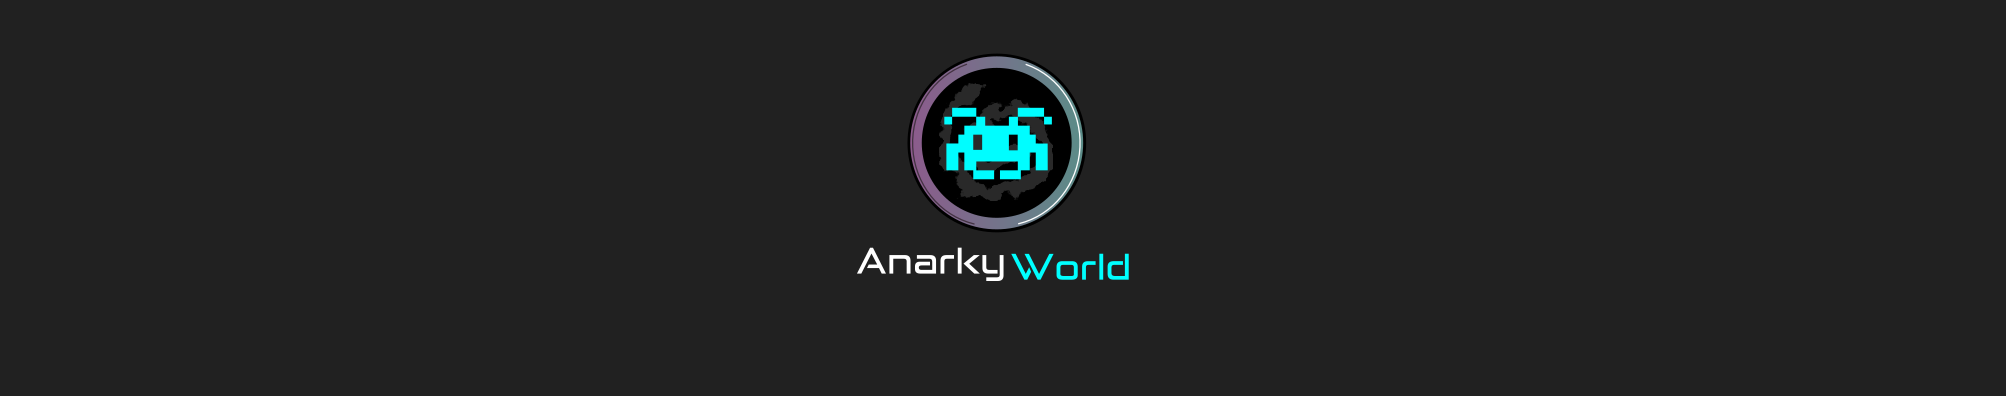 Anarky World's profile banner